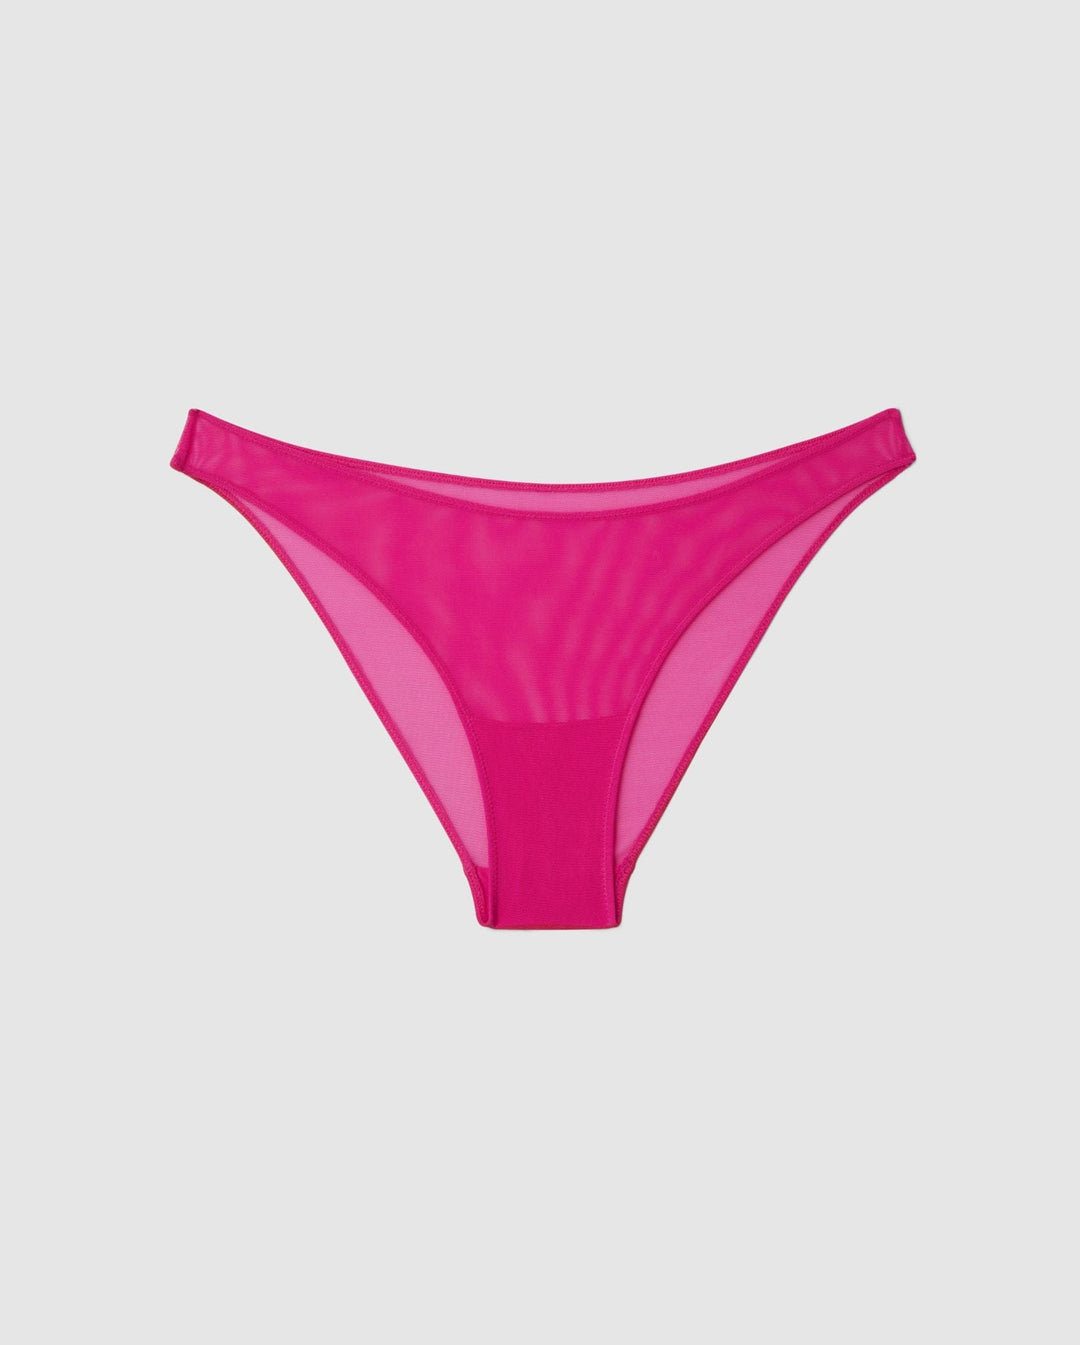 Thong Briefs Underwear Swimwear Swimsuit Panties